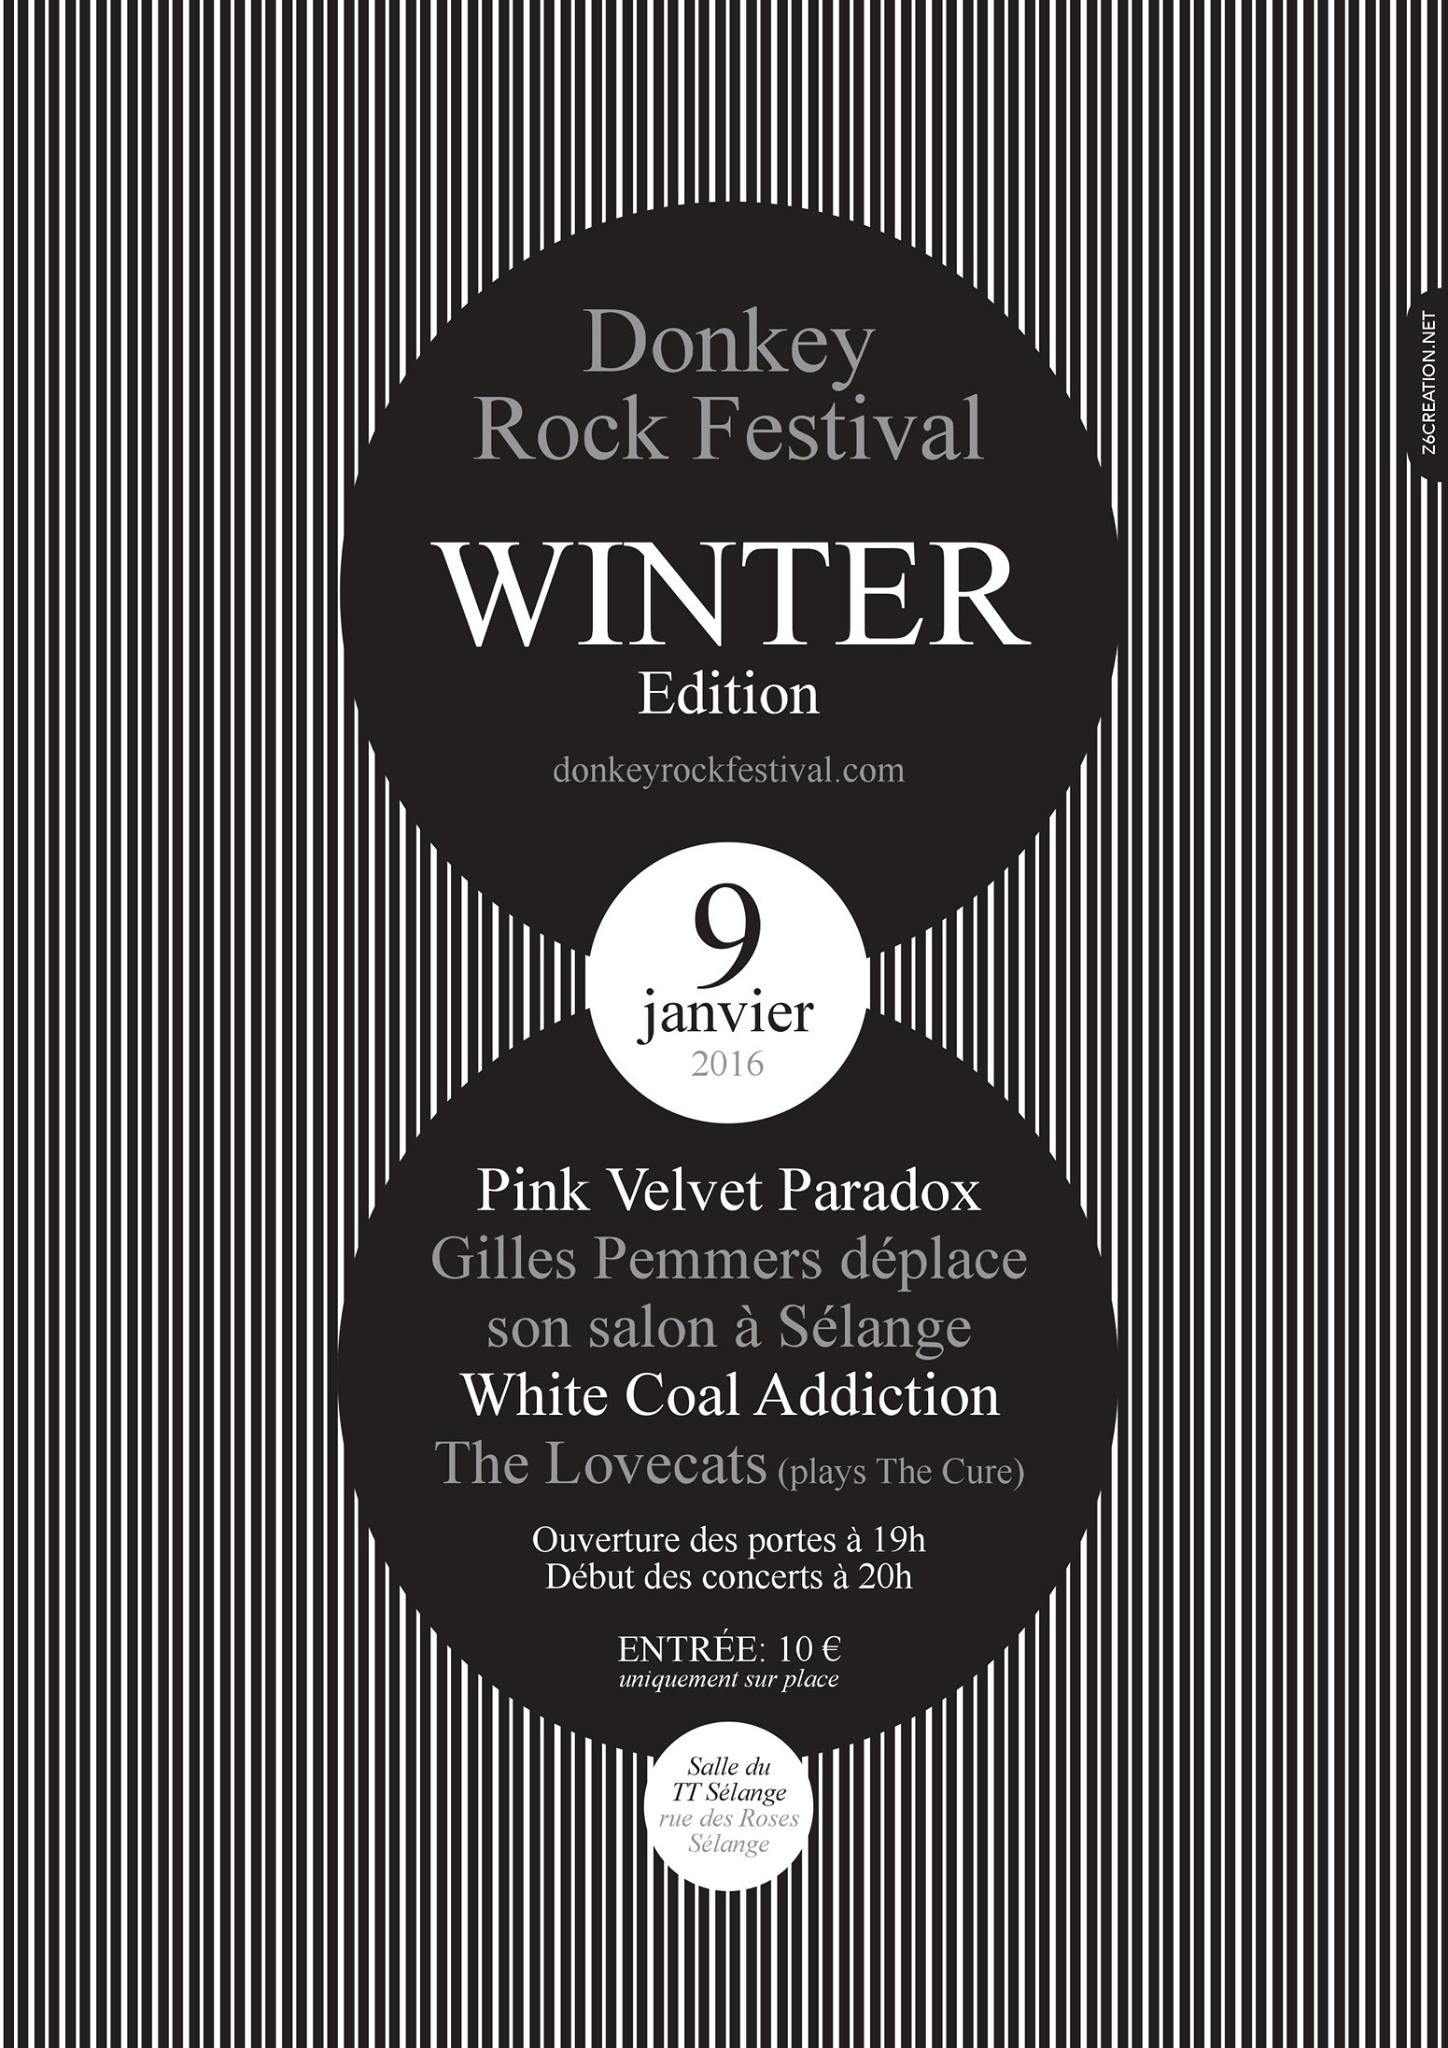 Donkey Rock Festival Winter 2016 Edition